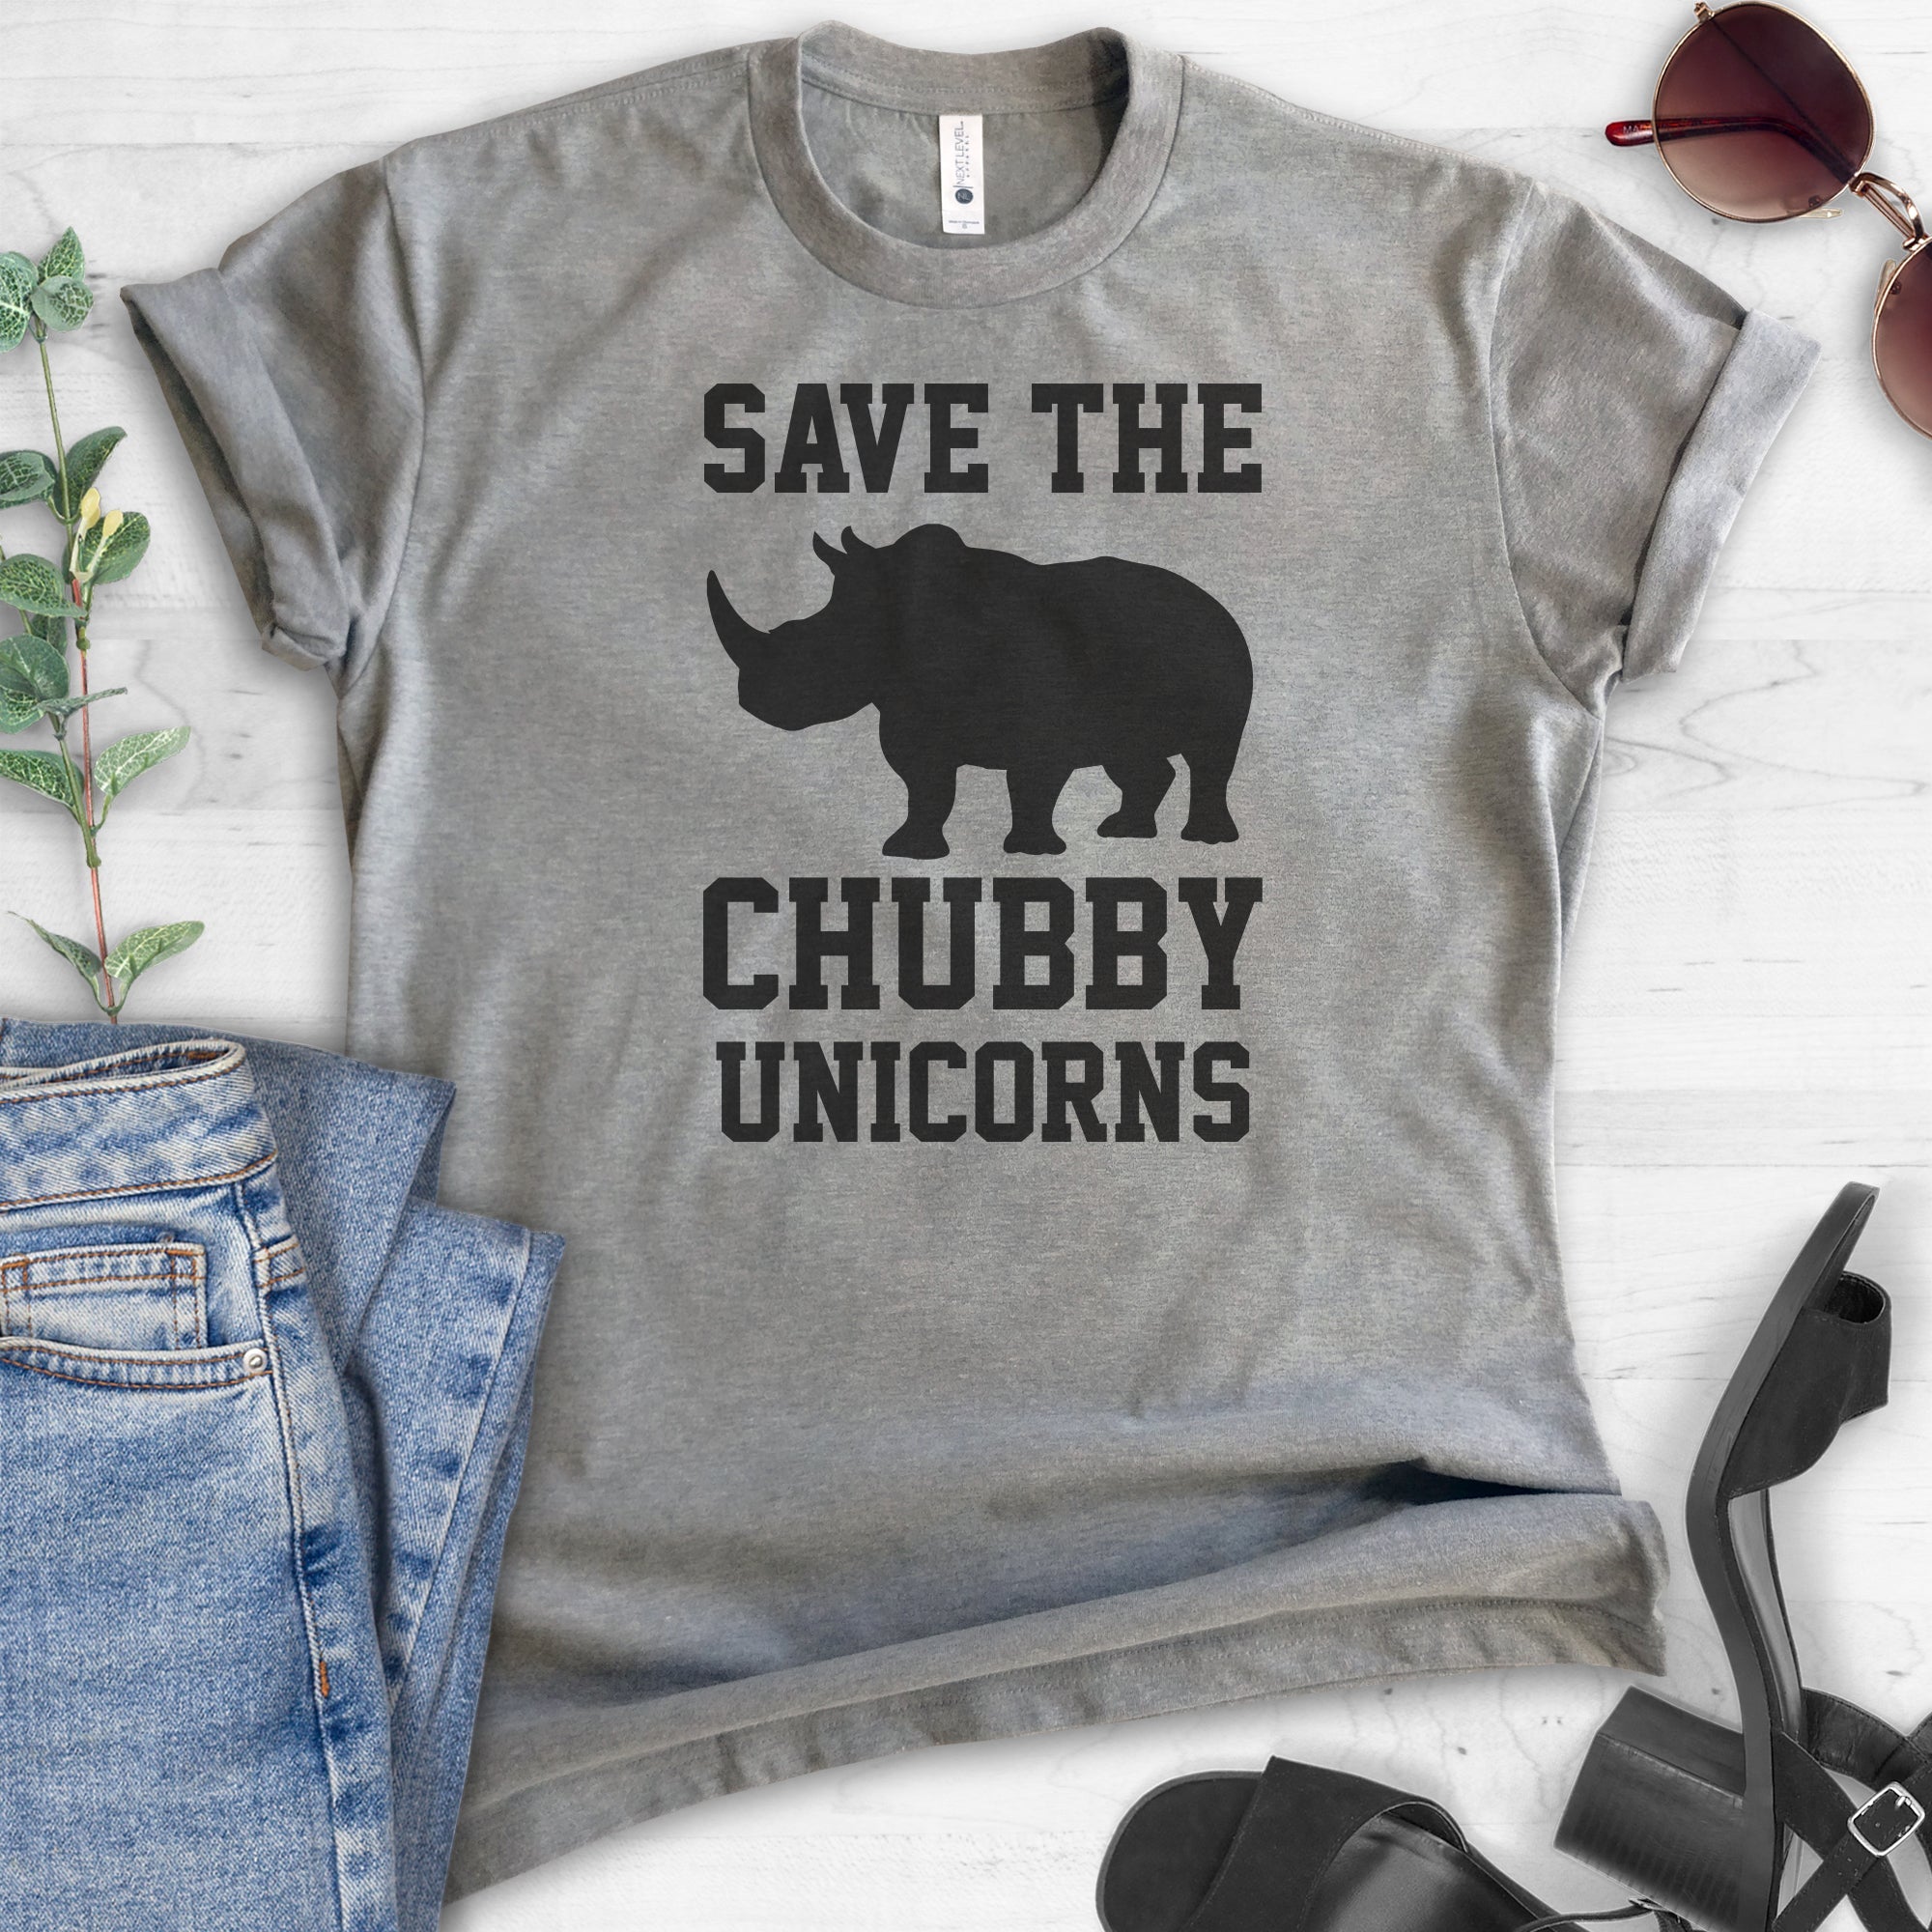 Save The Chubby Unicorns T-shirt